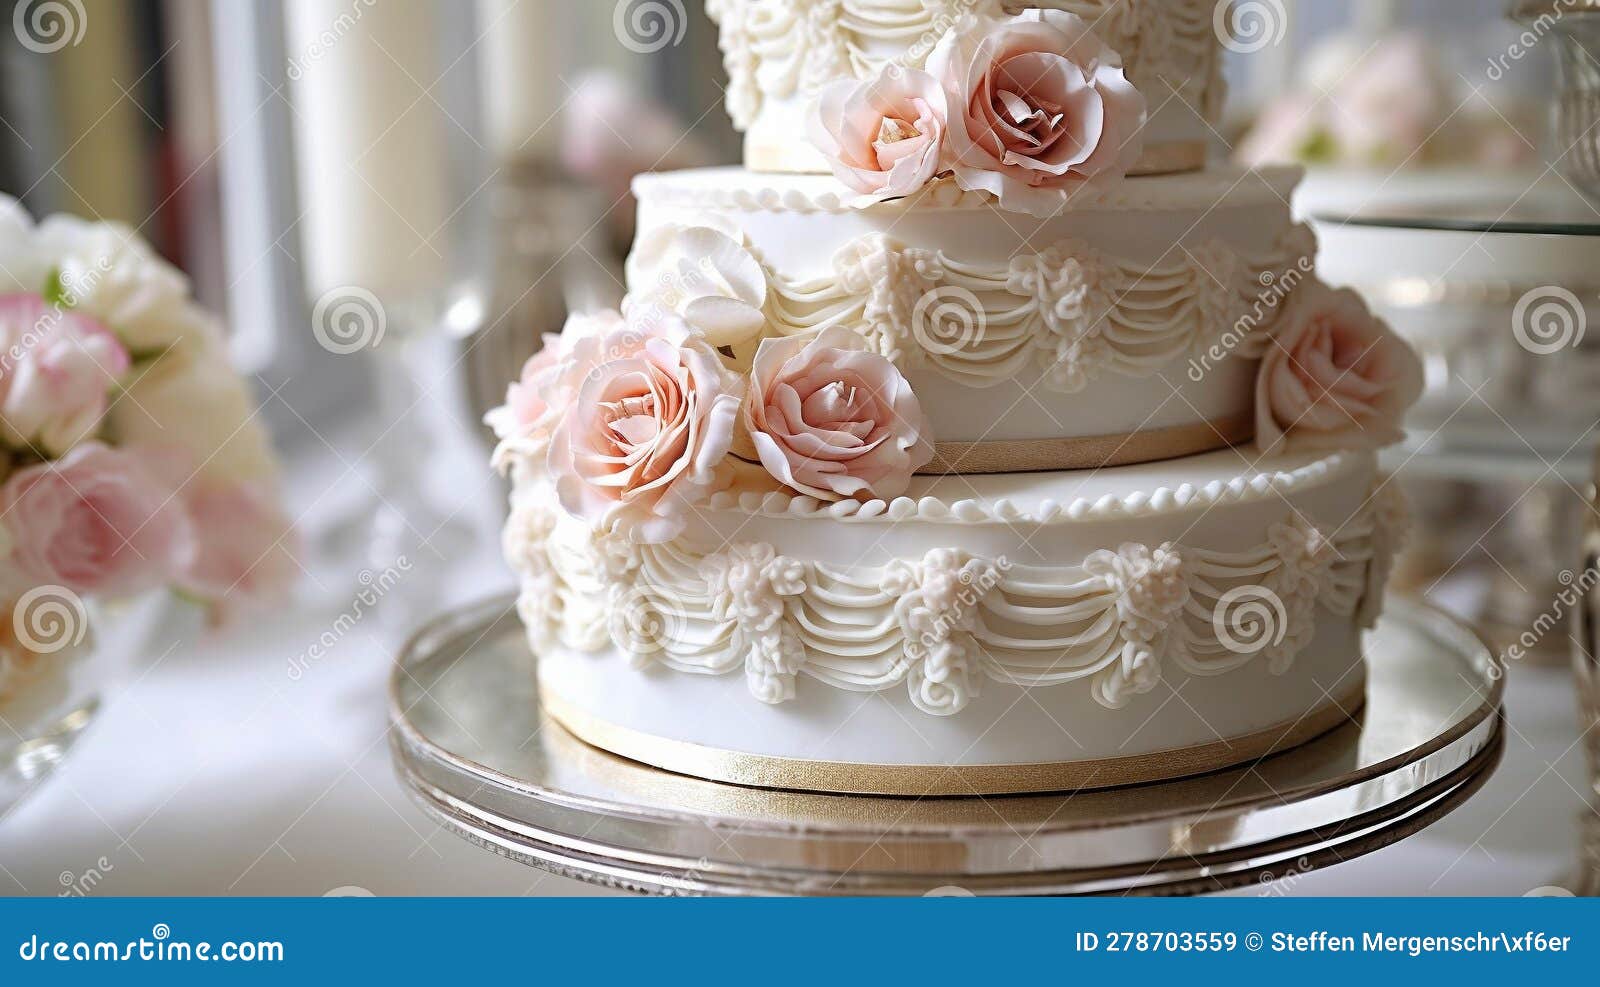 elegant multi-tiered wedding cake with fondant flowers